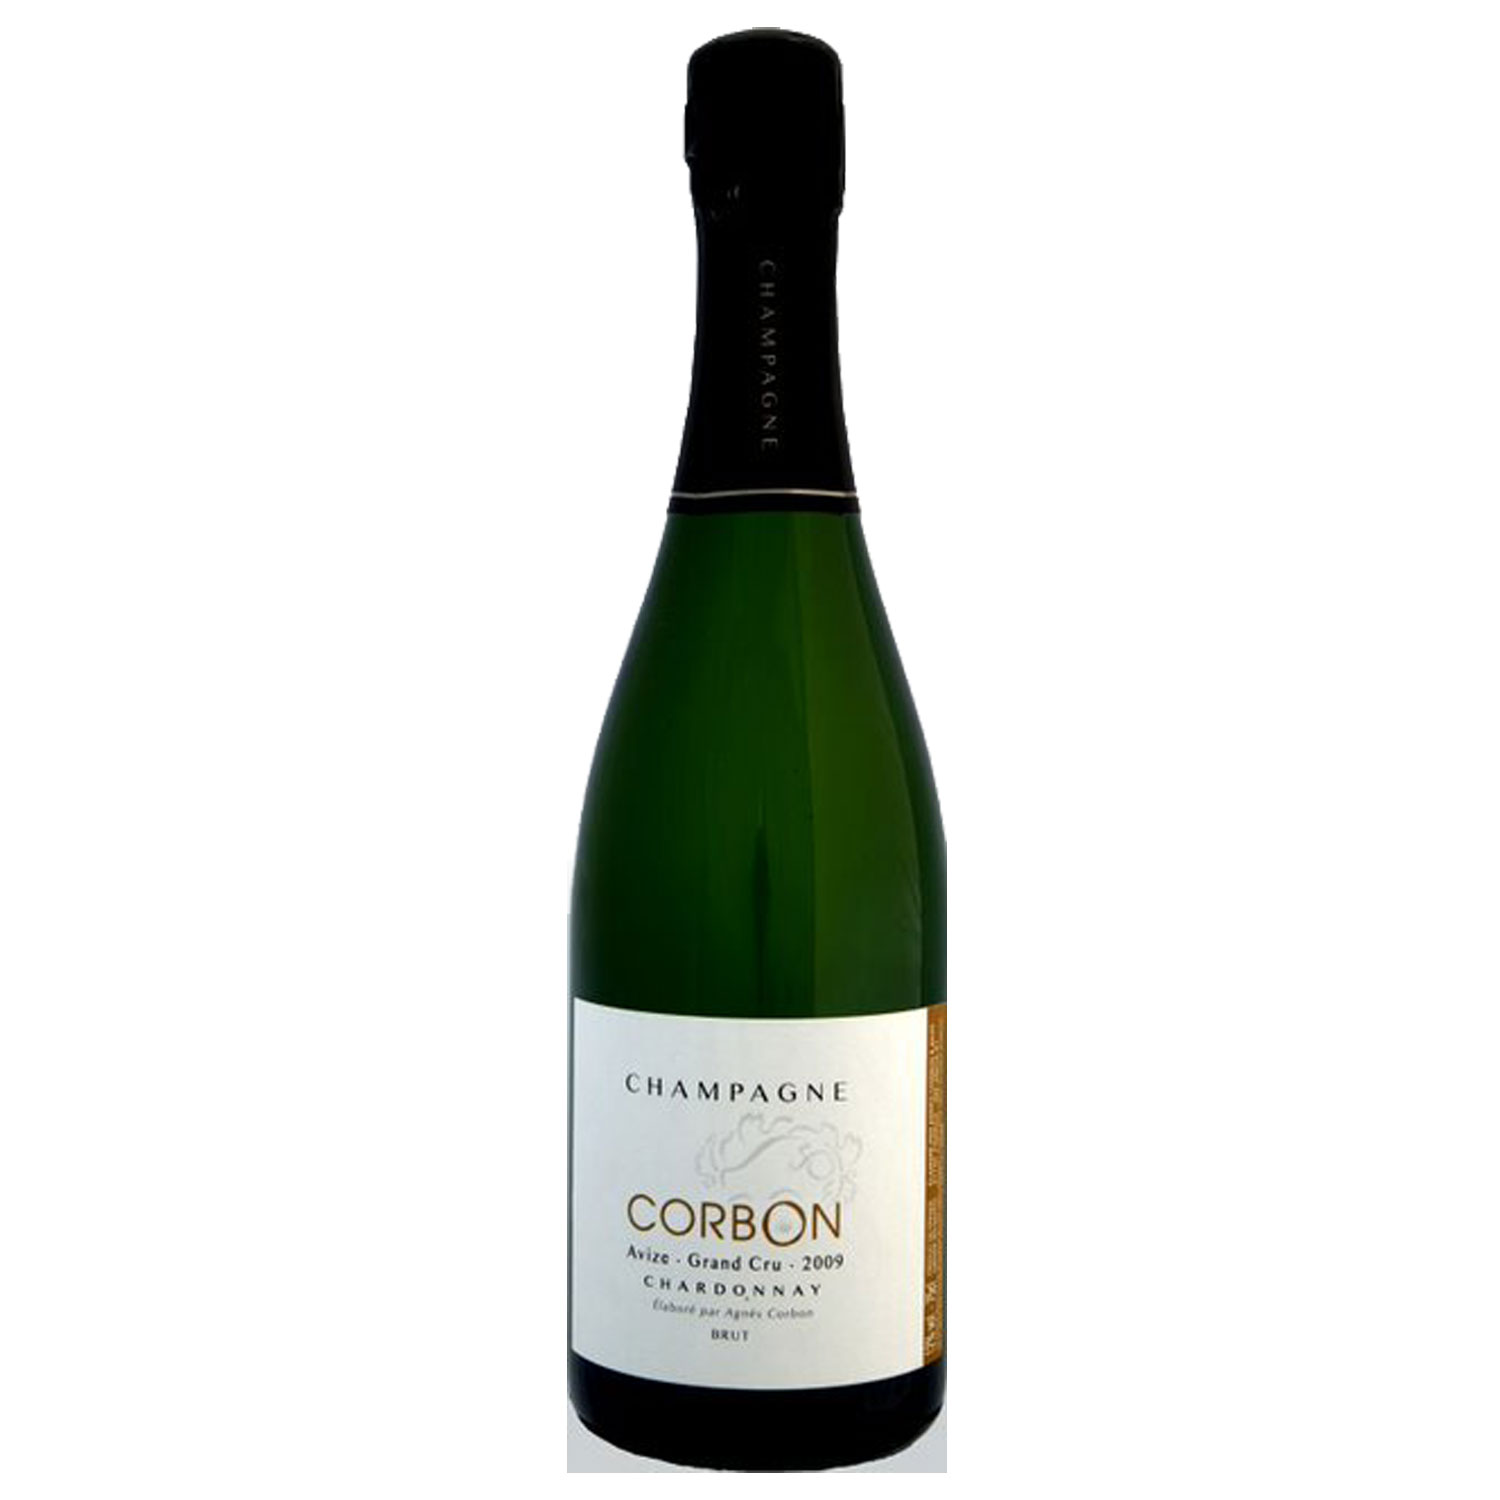 Champagne Corbon: Chardonnay Millésime 2009 - Grand Cru - Avize